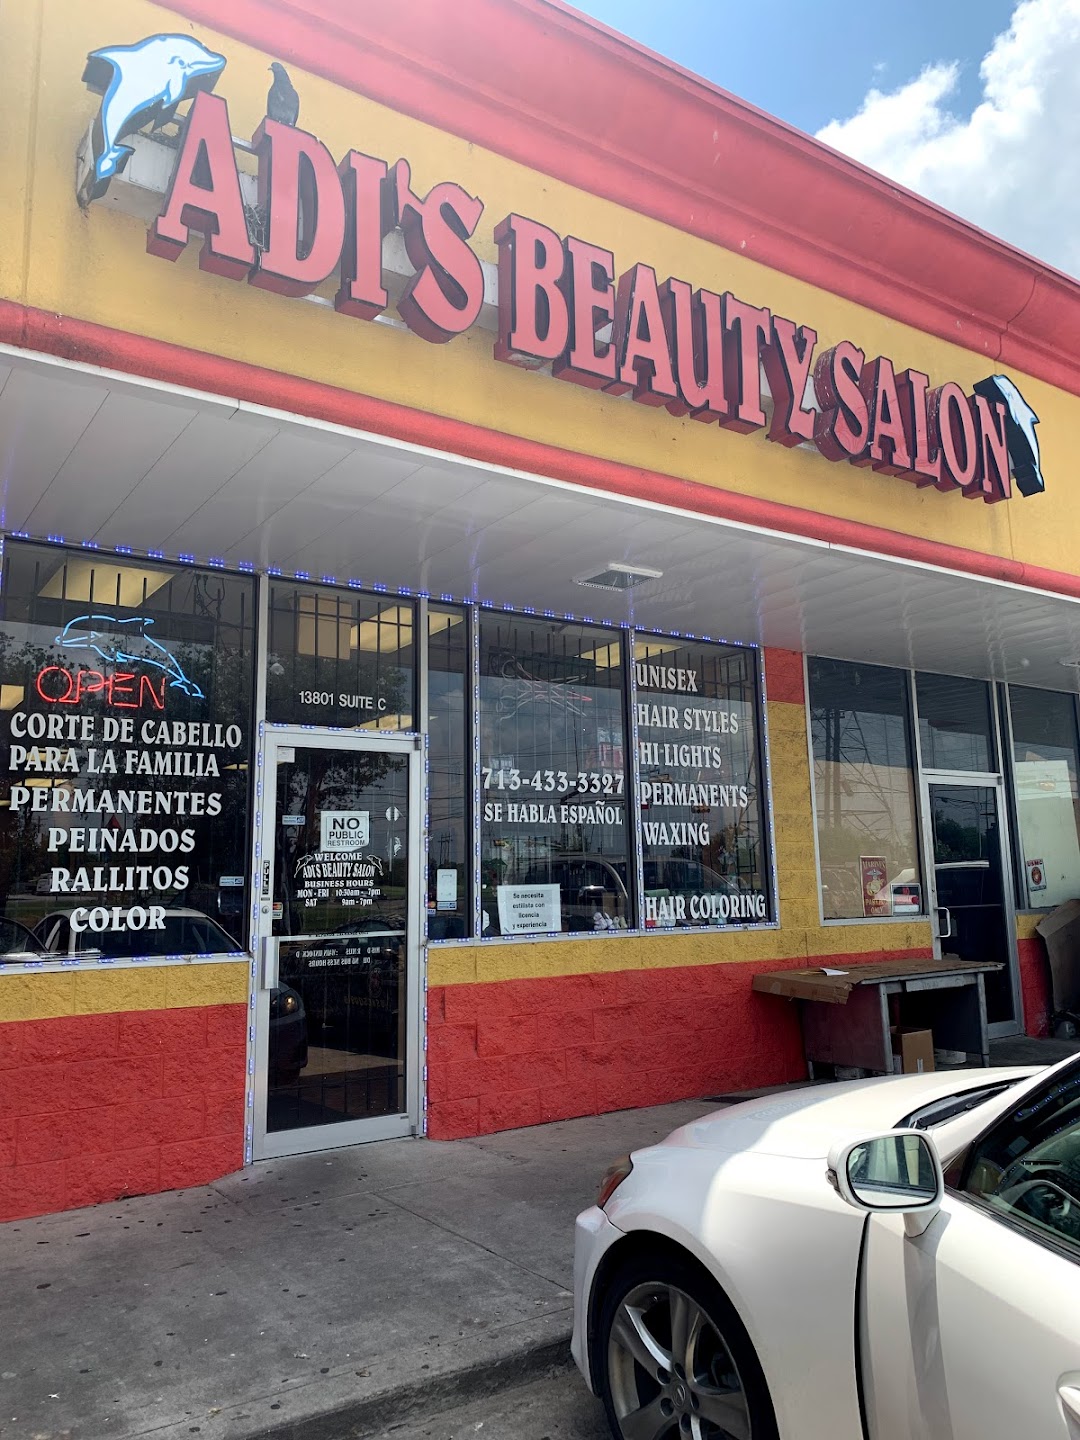 Adis Beauty Salon